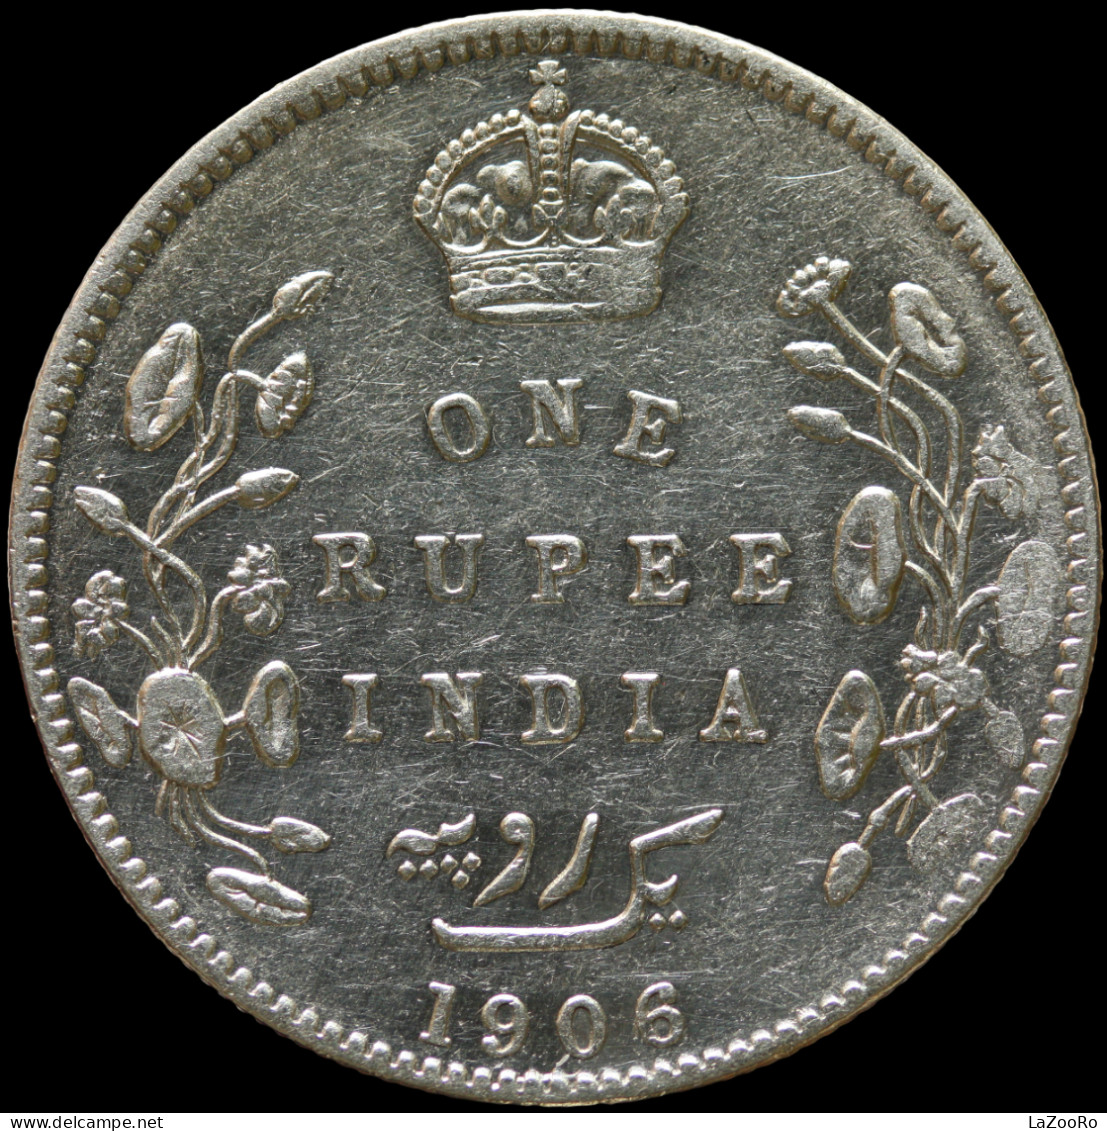 LaZooRo: British India 1 Rupee 1906 XF - Silver - Colonias